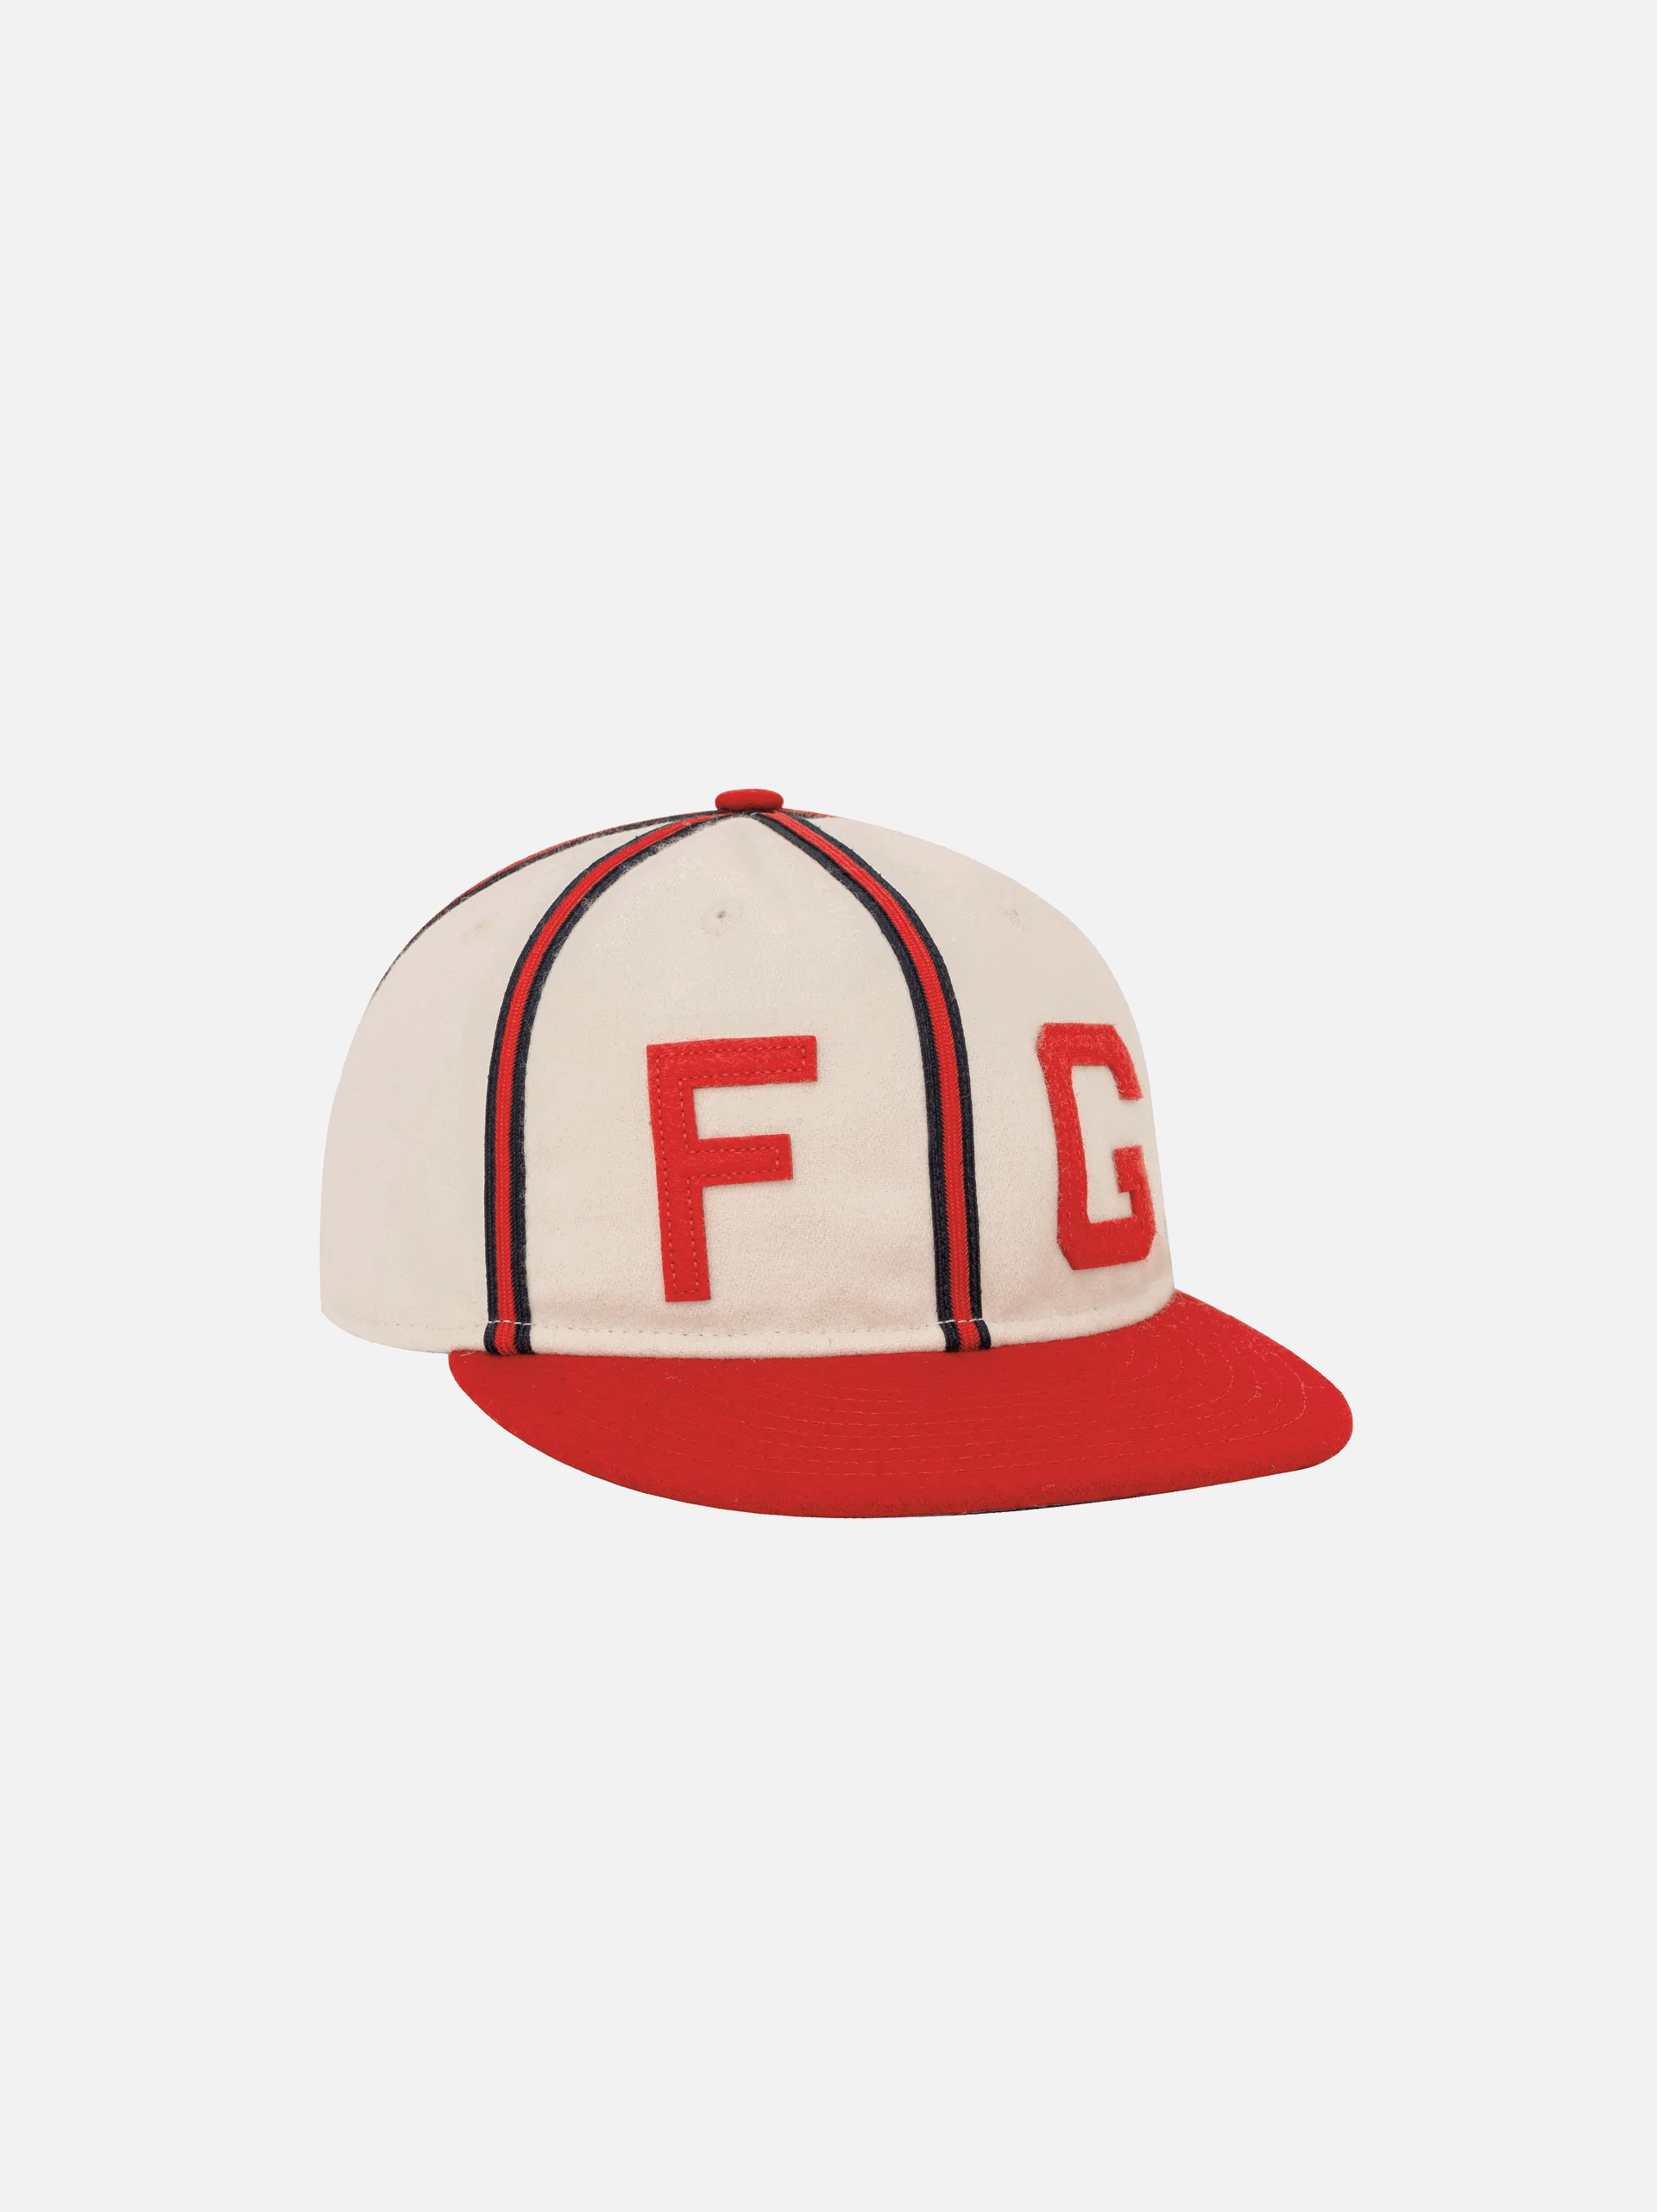 NEW ERA X FOG KANSAS CITY MONARCHS CAP - CREAM / RED